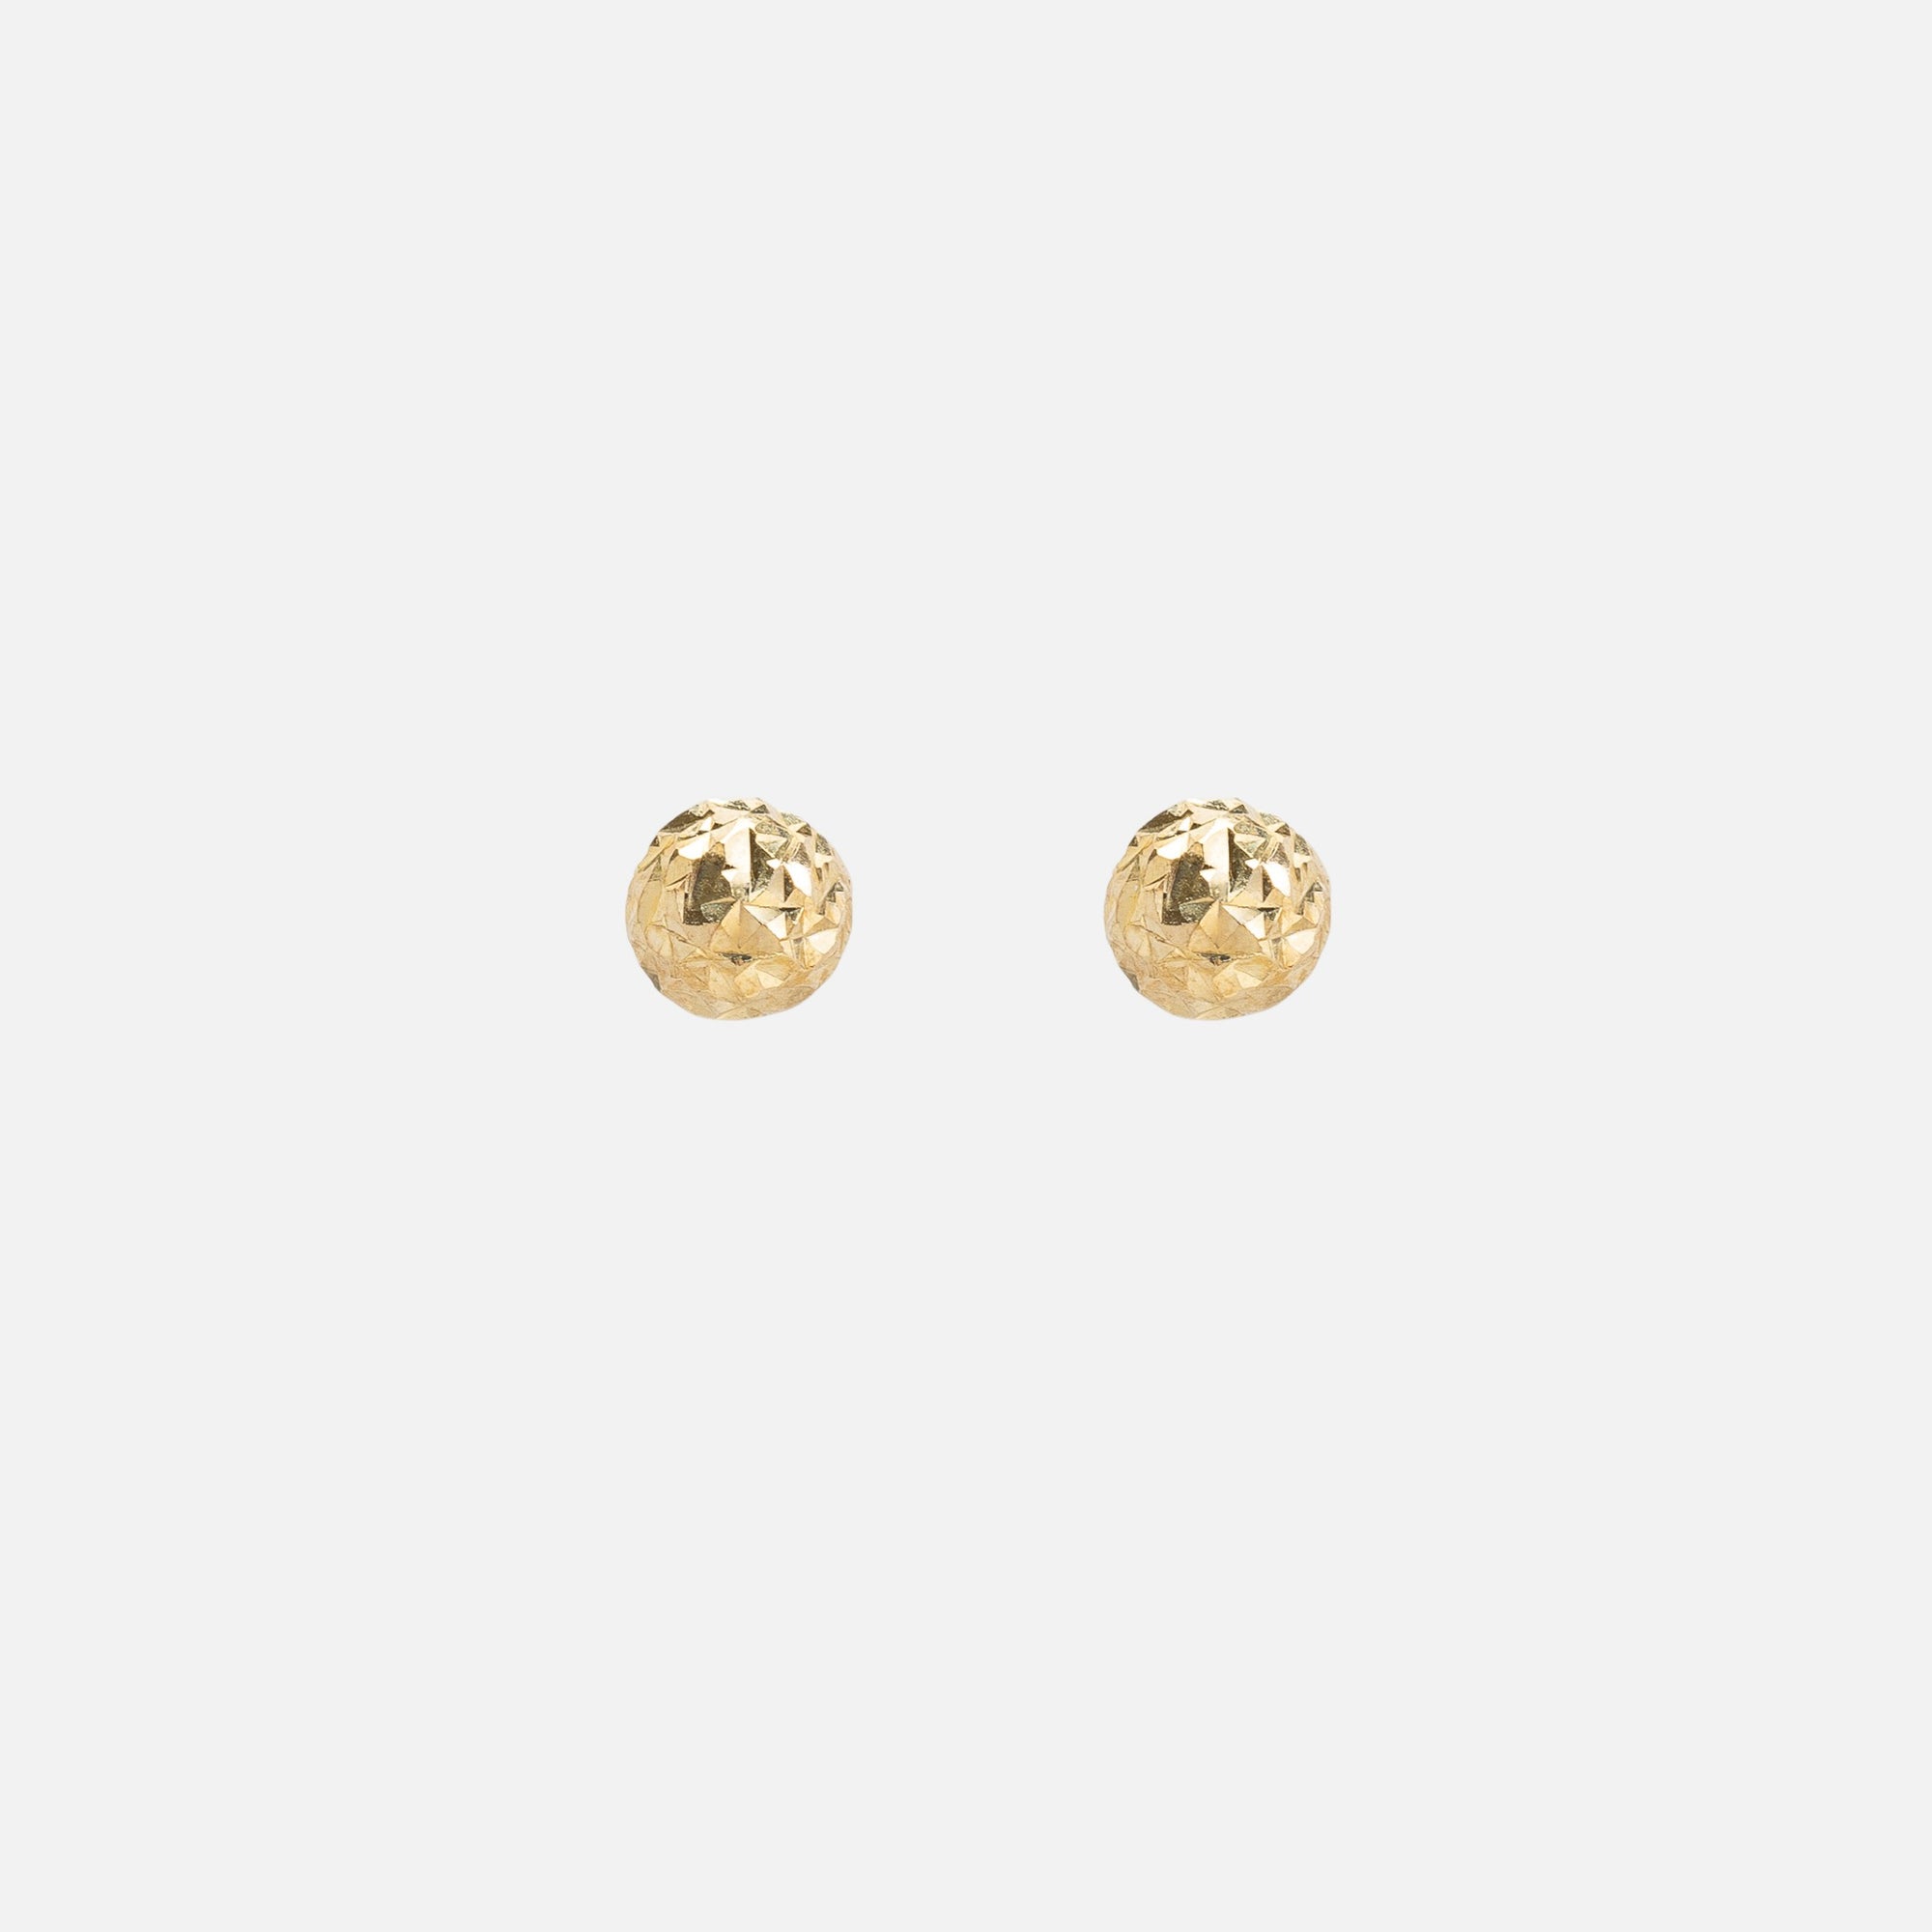 10k yellow gold ball earrings 